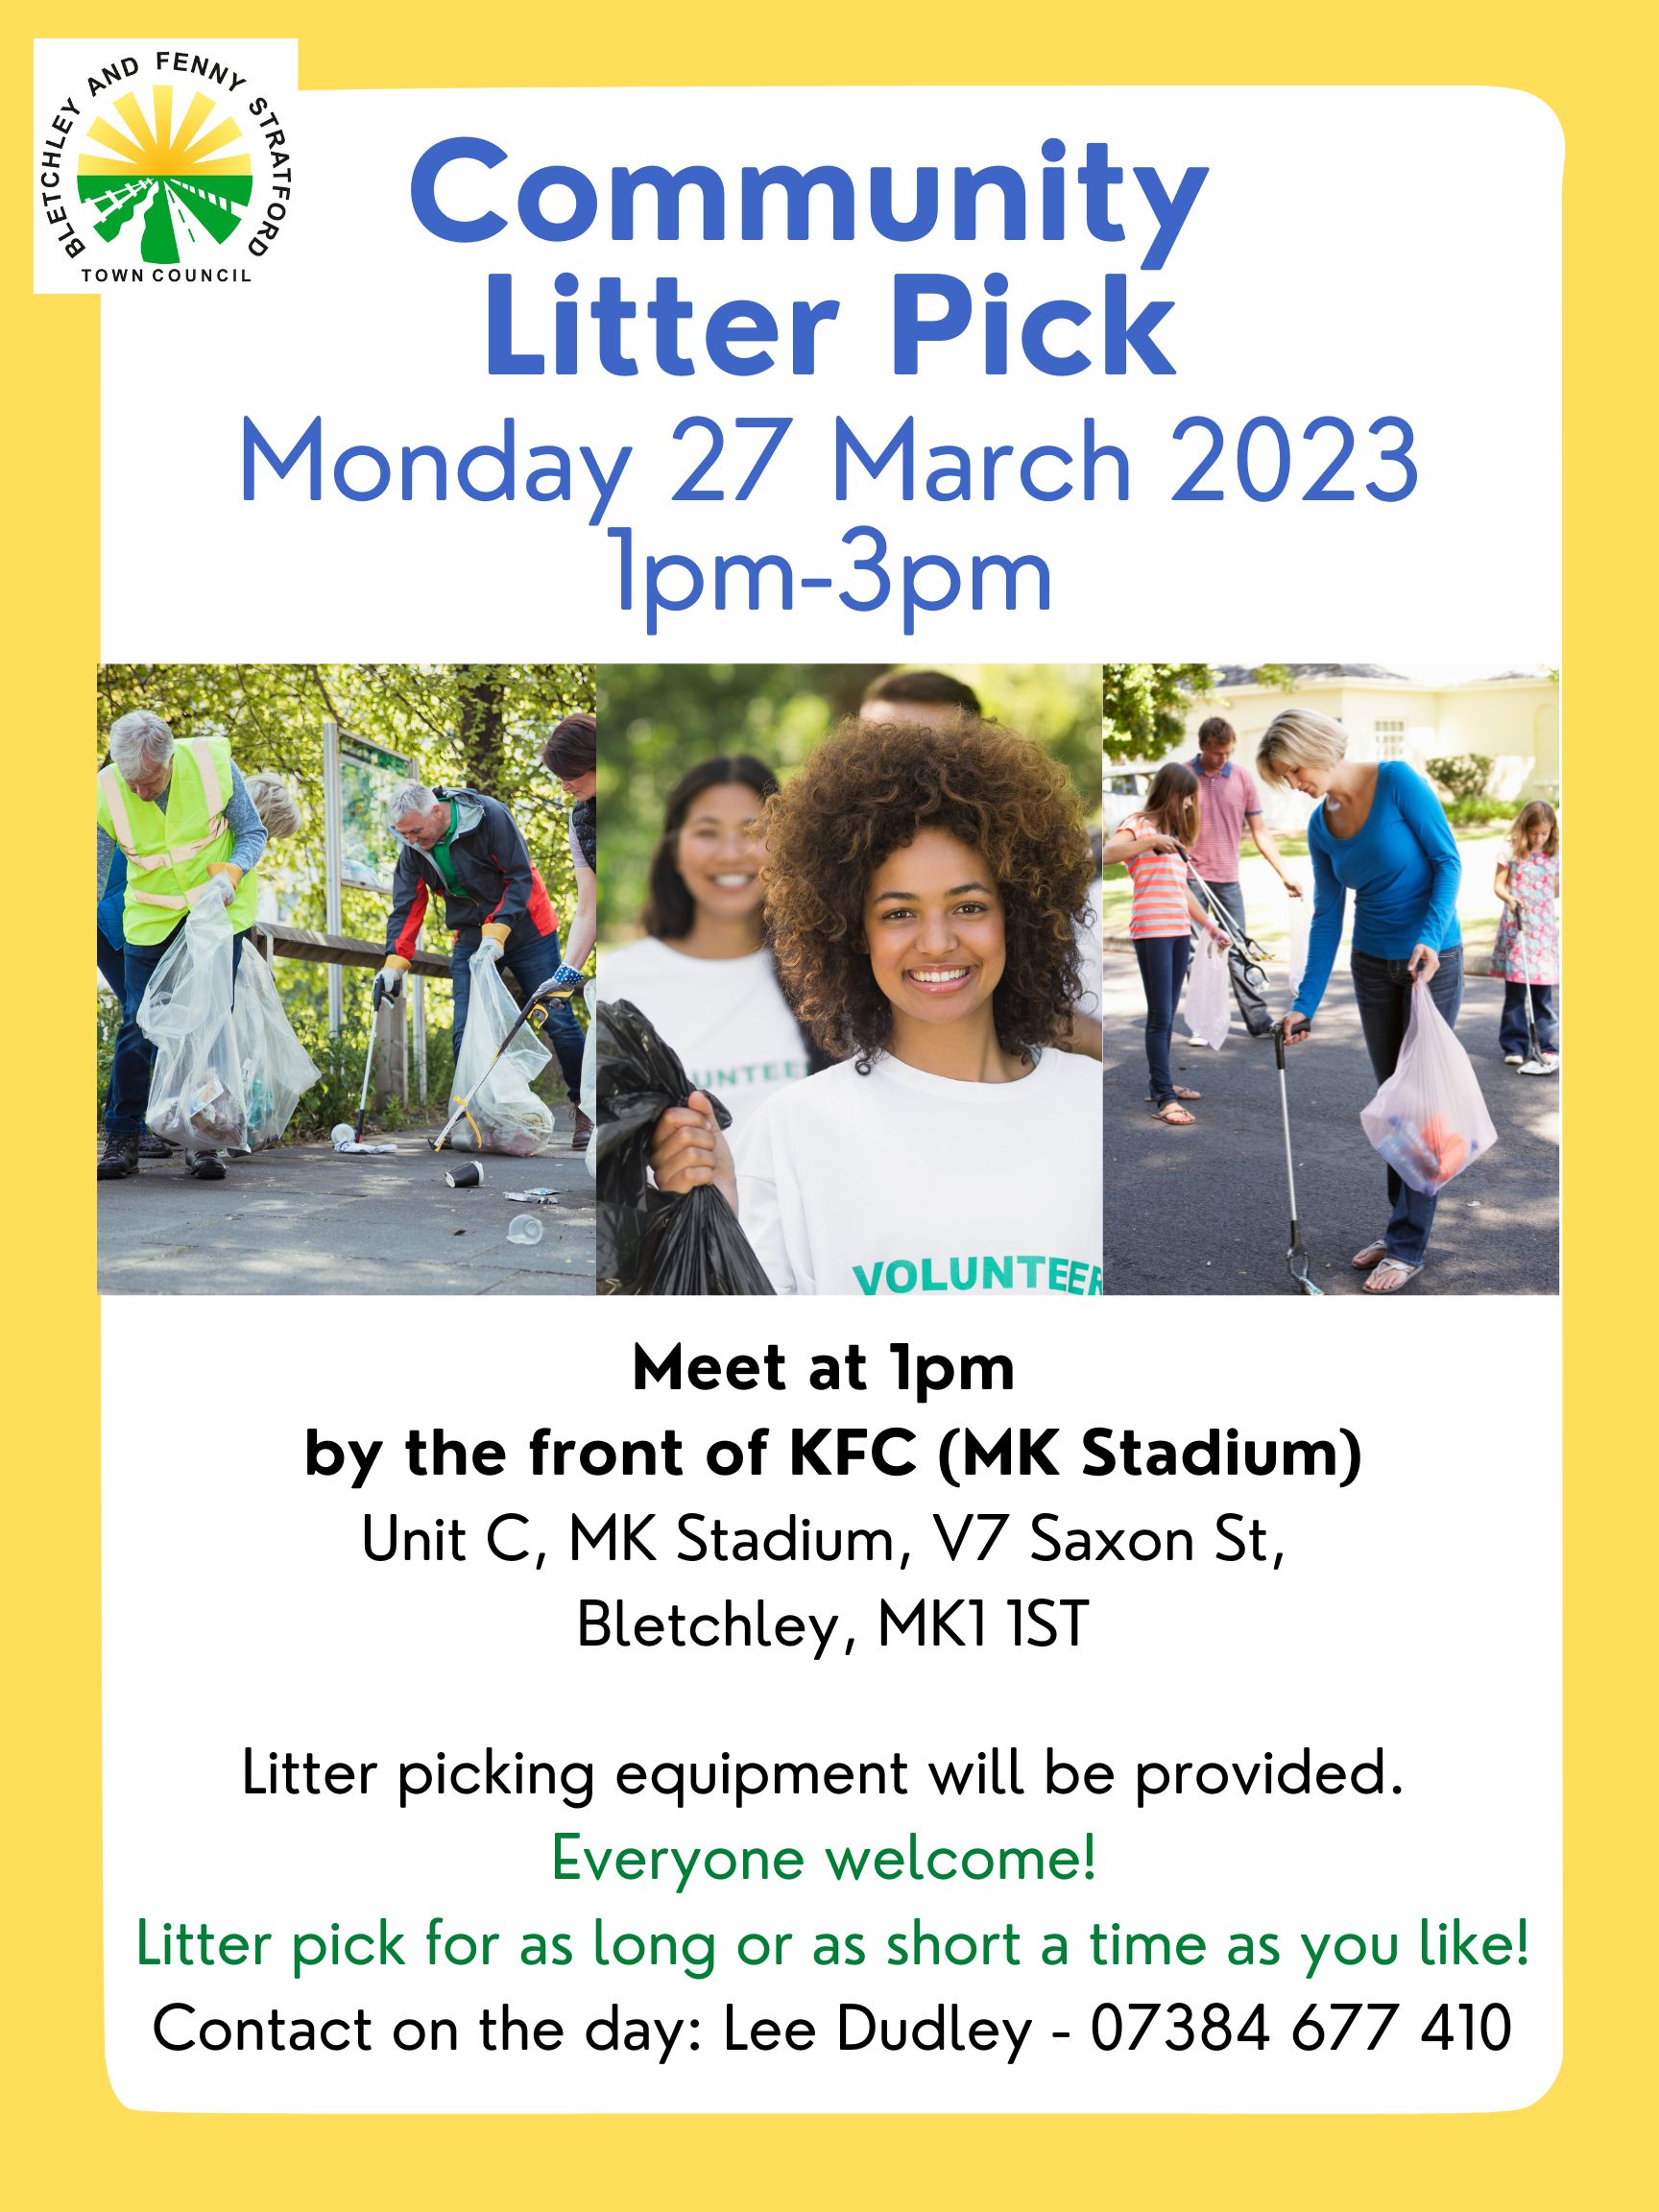 Image of Community Litter Pick poster